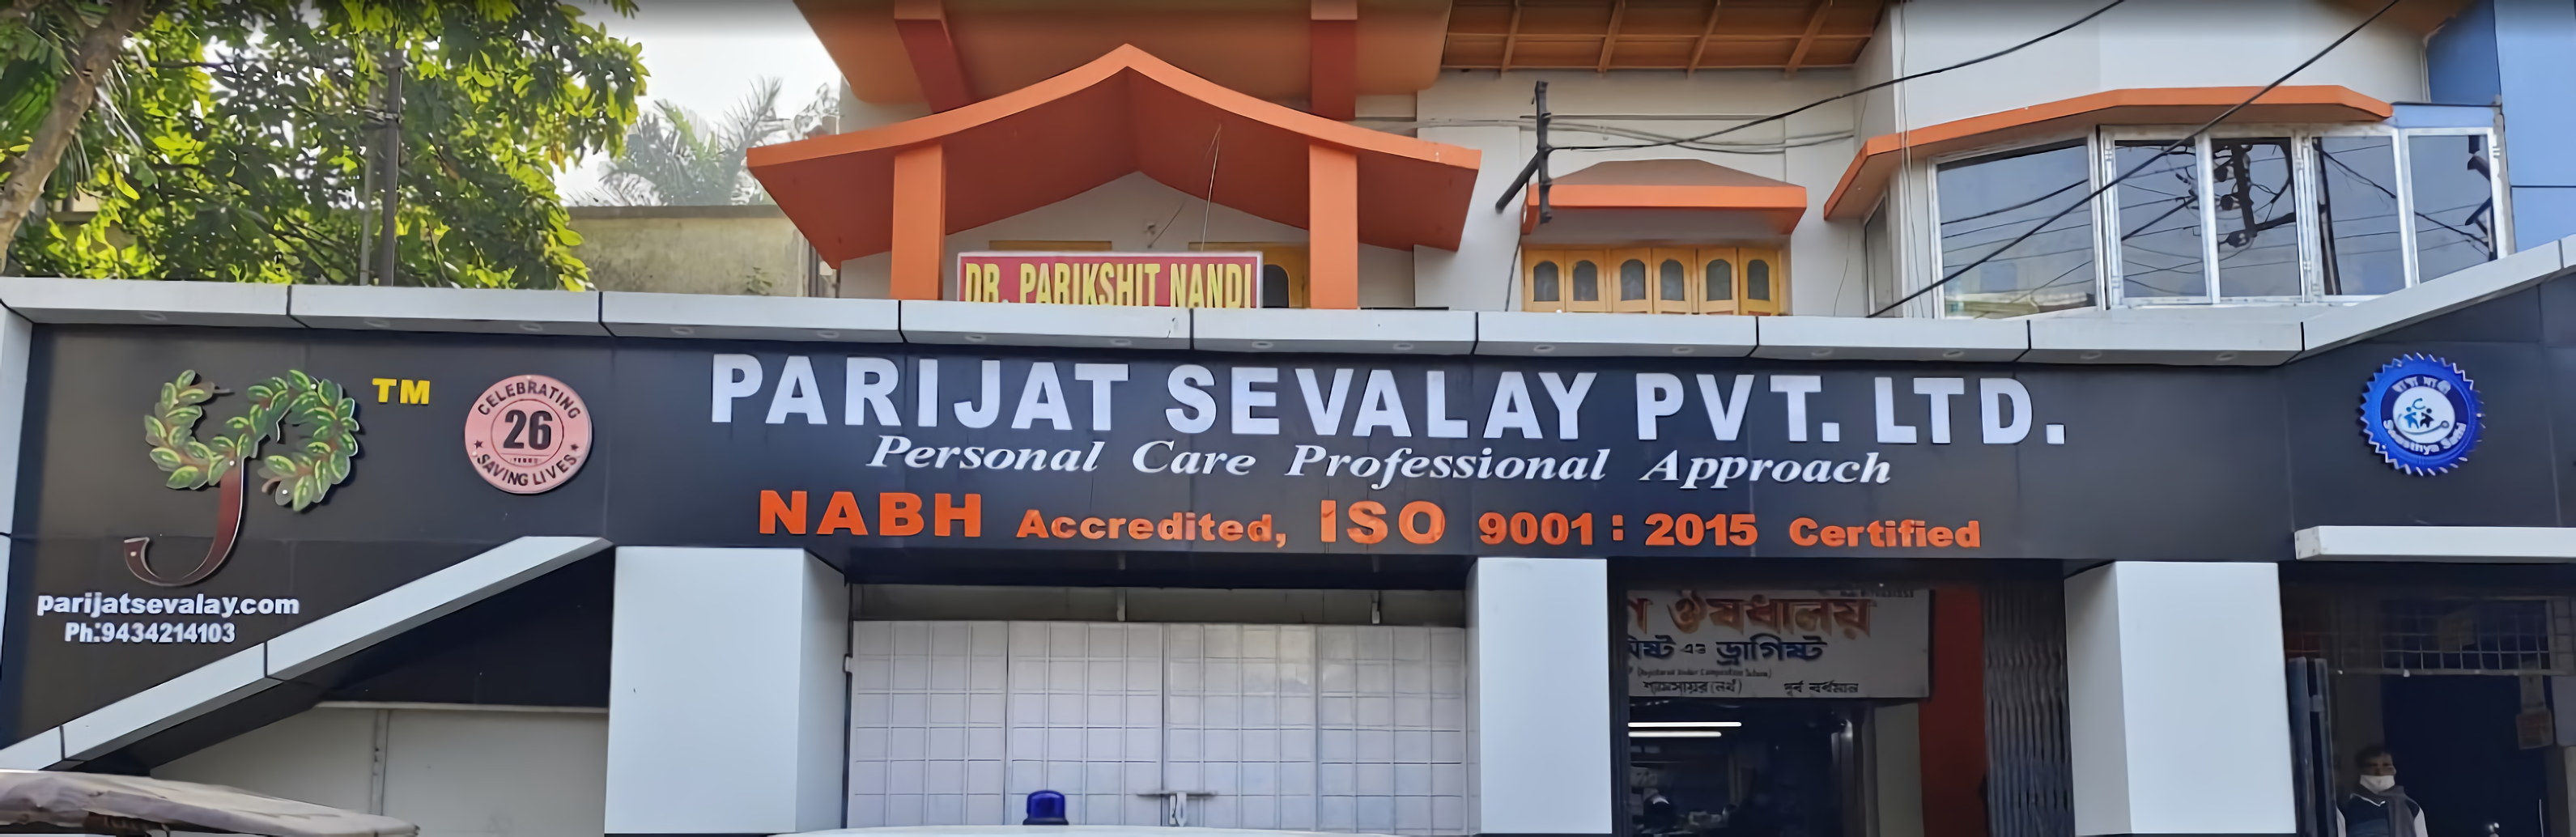 Parijat Sevalay Pvt Ltd